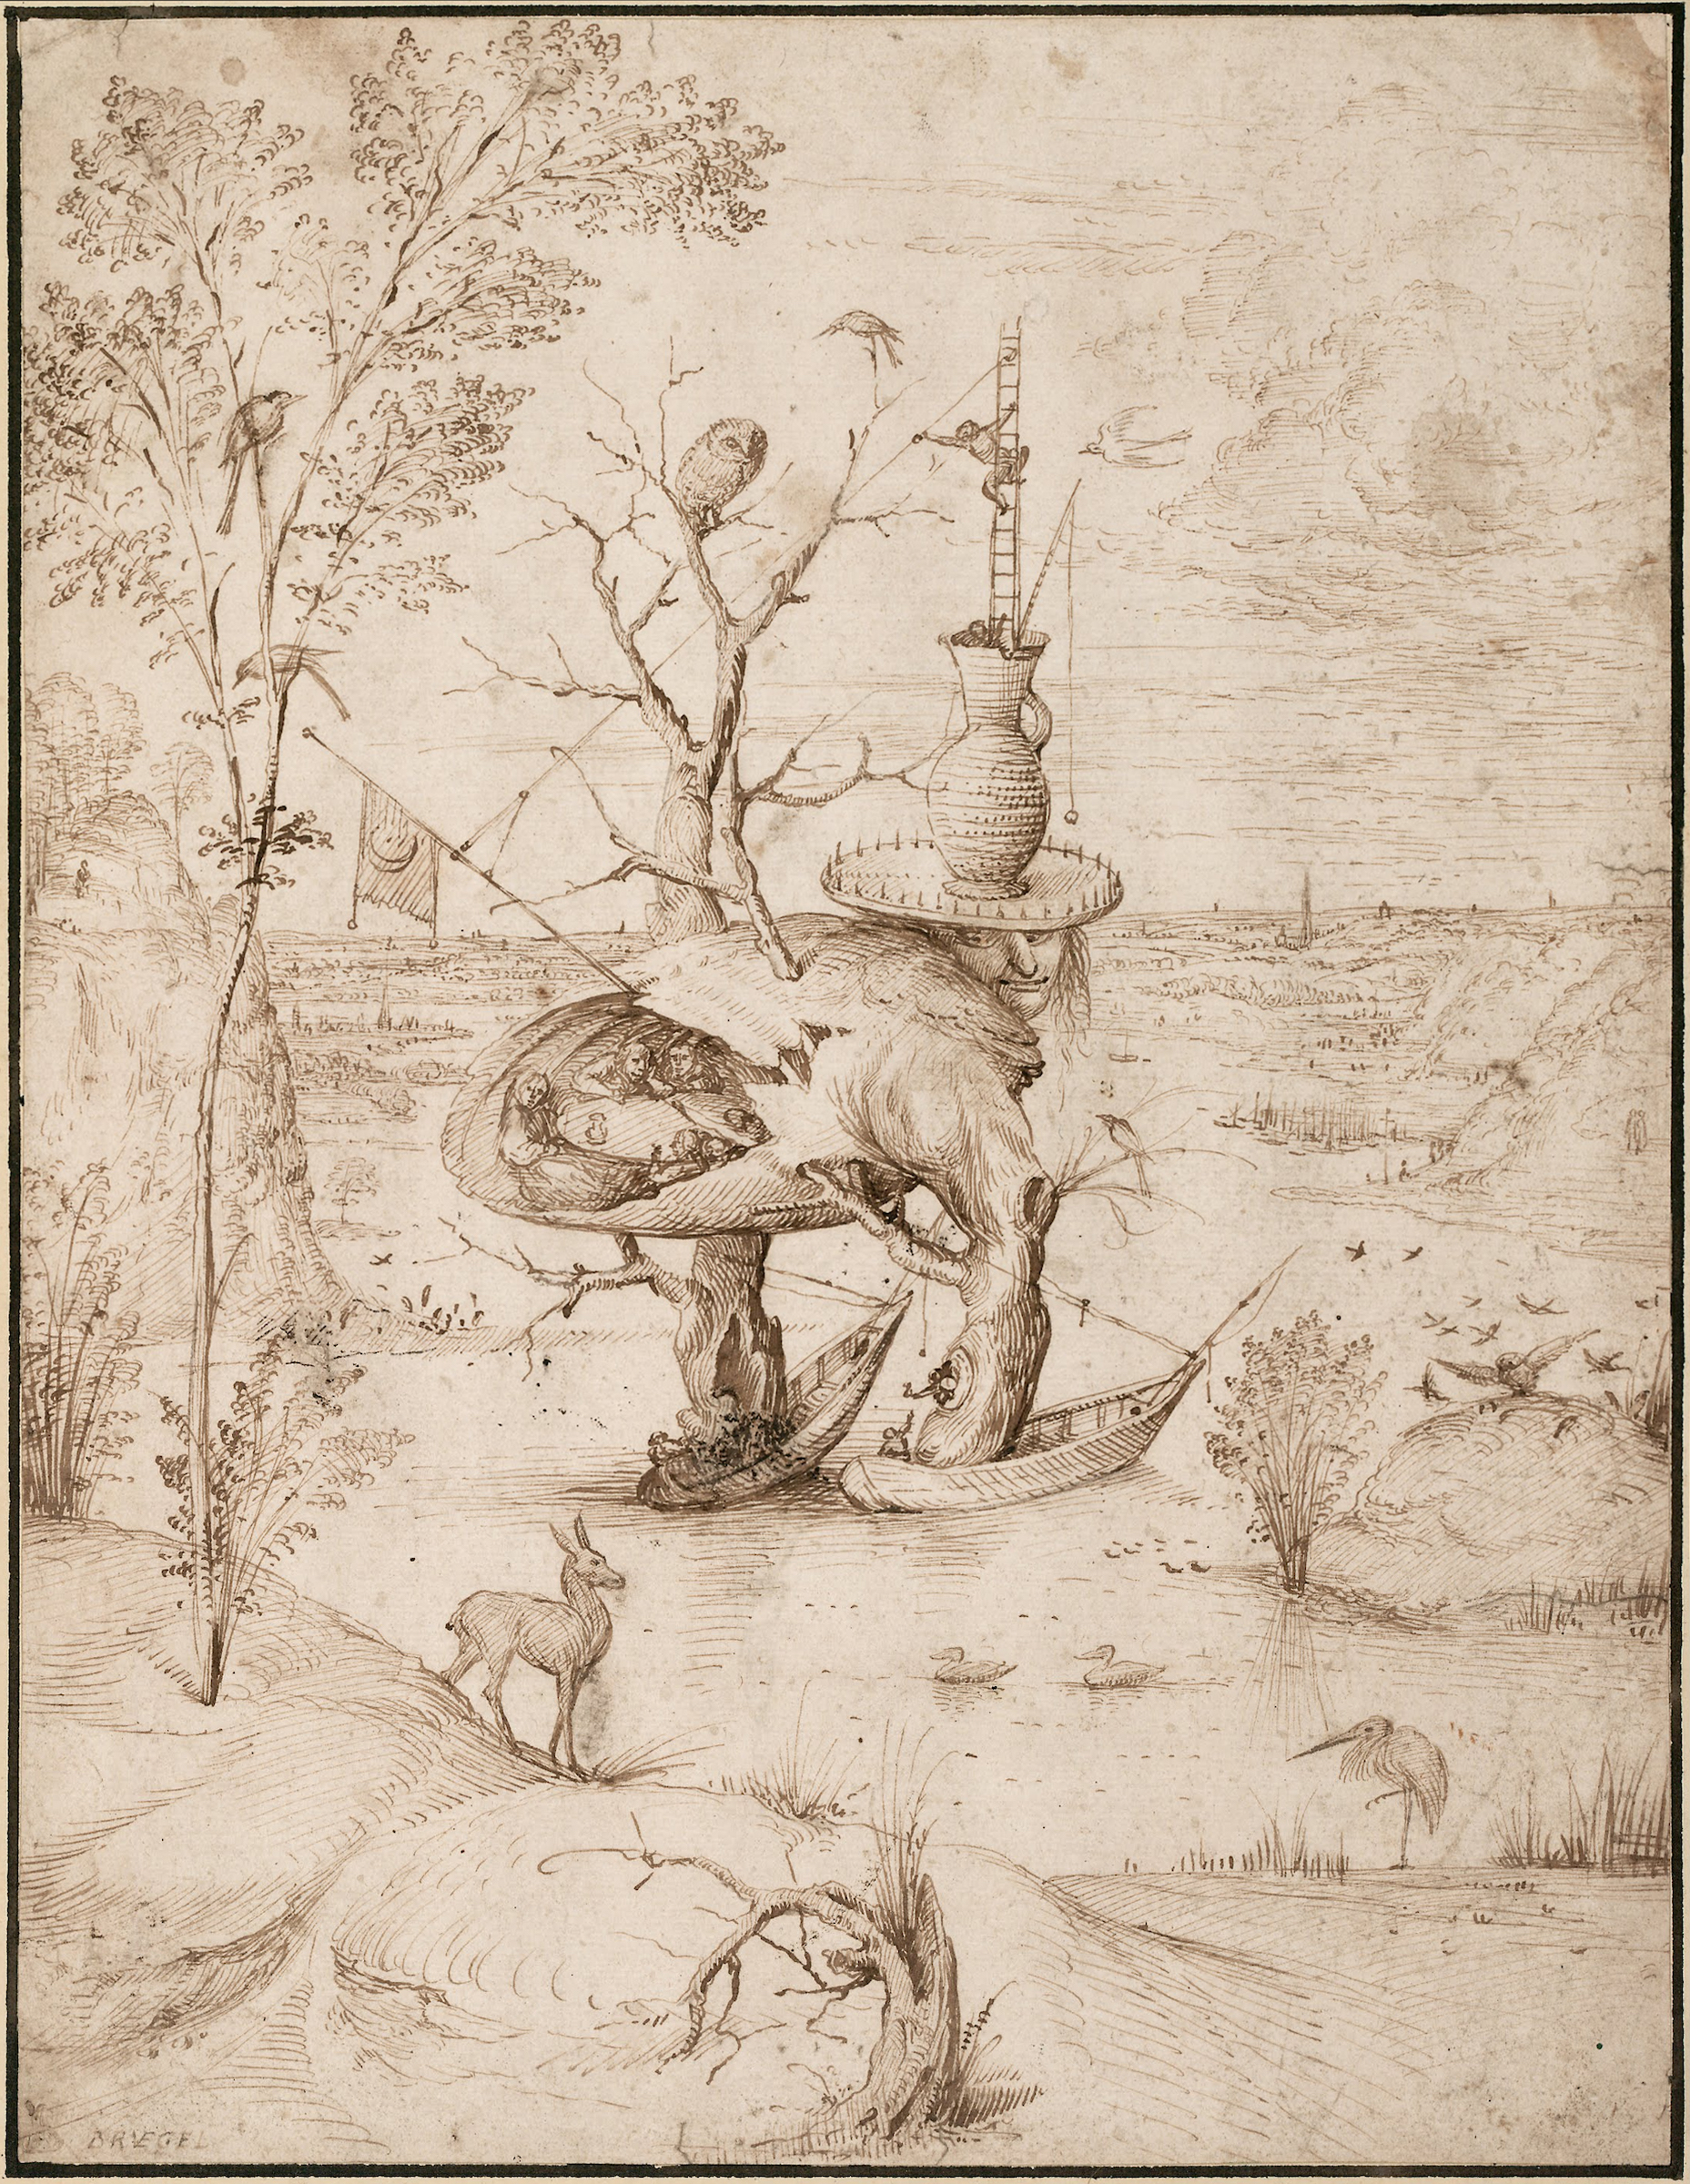 L'uomo-albero by Hieronymus Bosch - 1500 - 27,7 x 21,1 cm Europeana